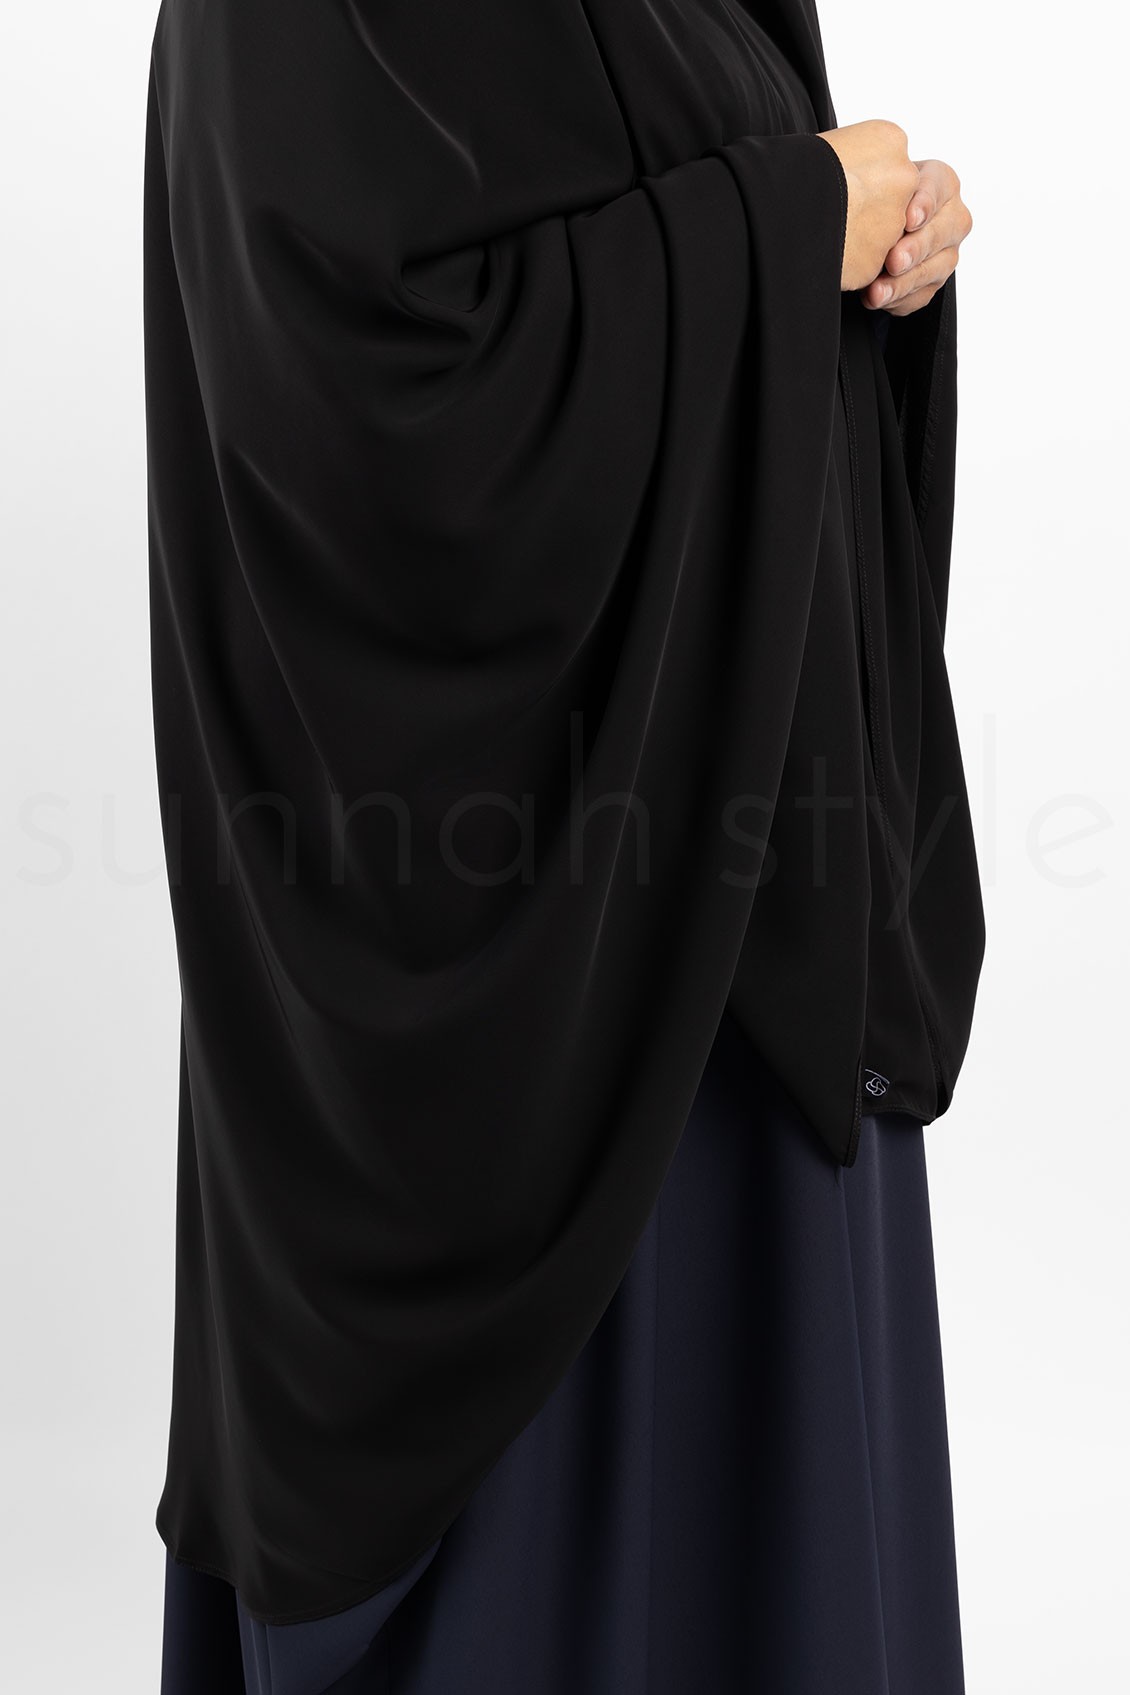 Sunnah Style Essentials Khimar Knee Length Black